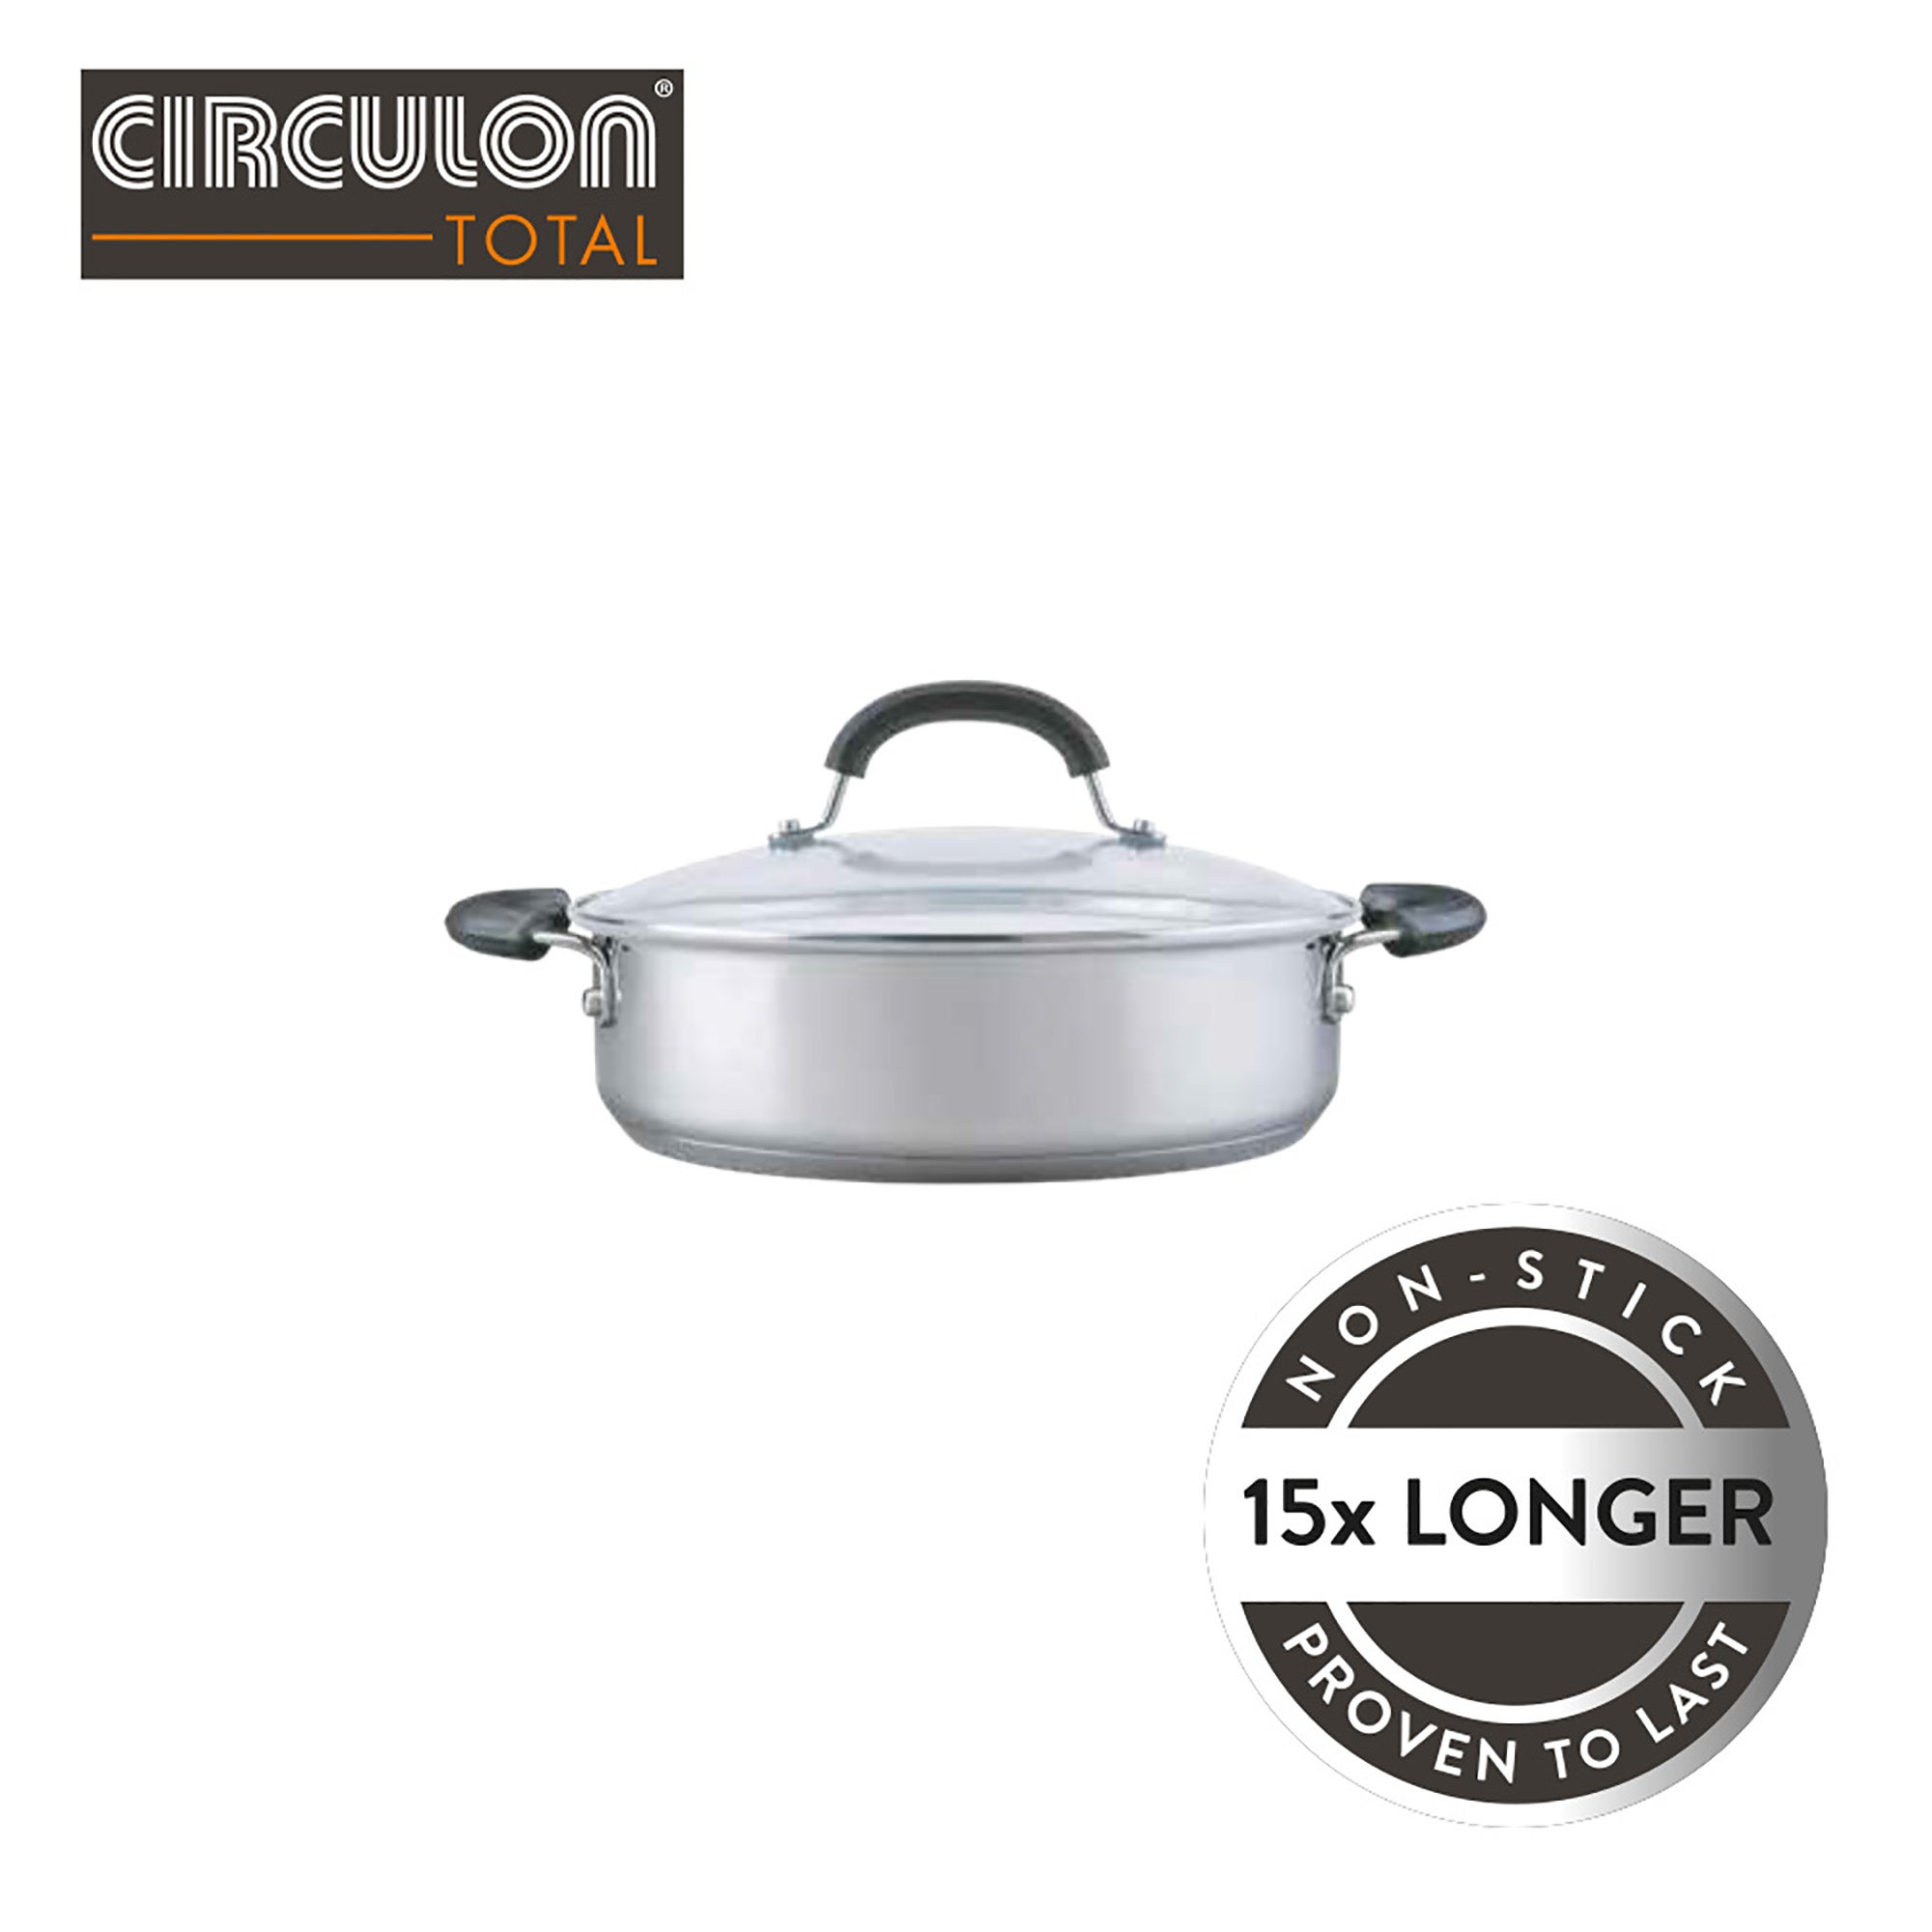 Circulon Total Non-Stick Stainless Steel Casserole Pan, 24cm